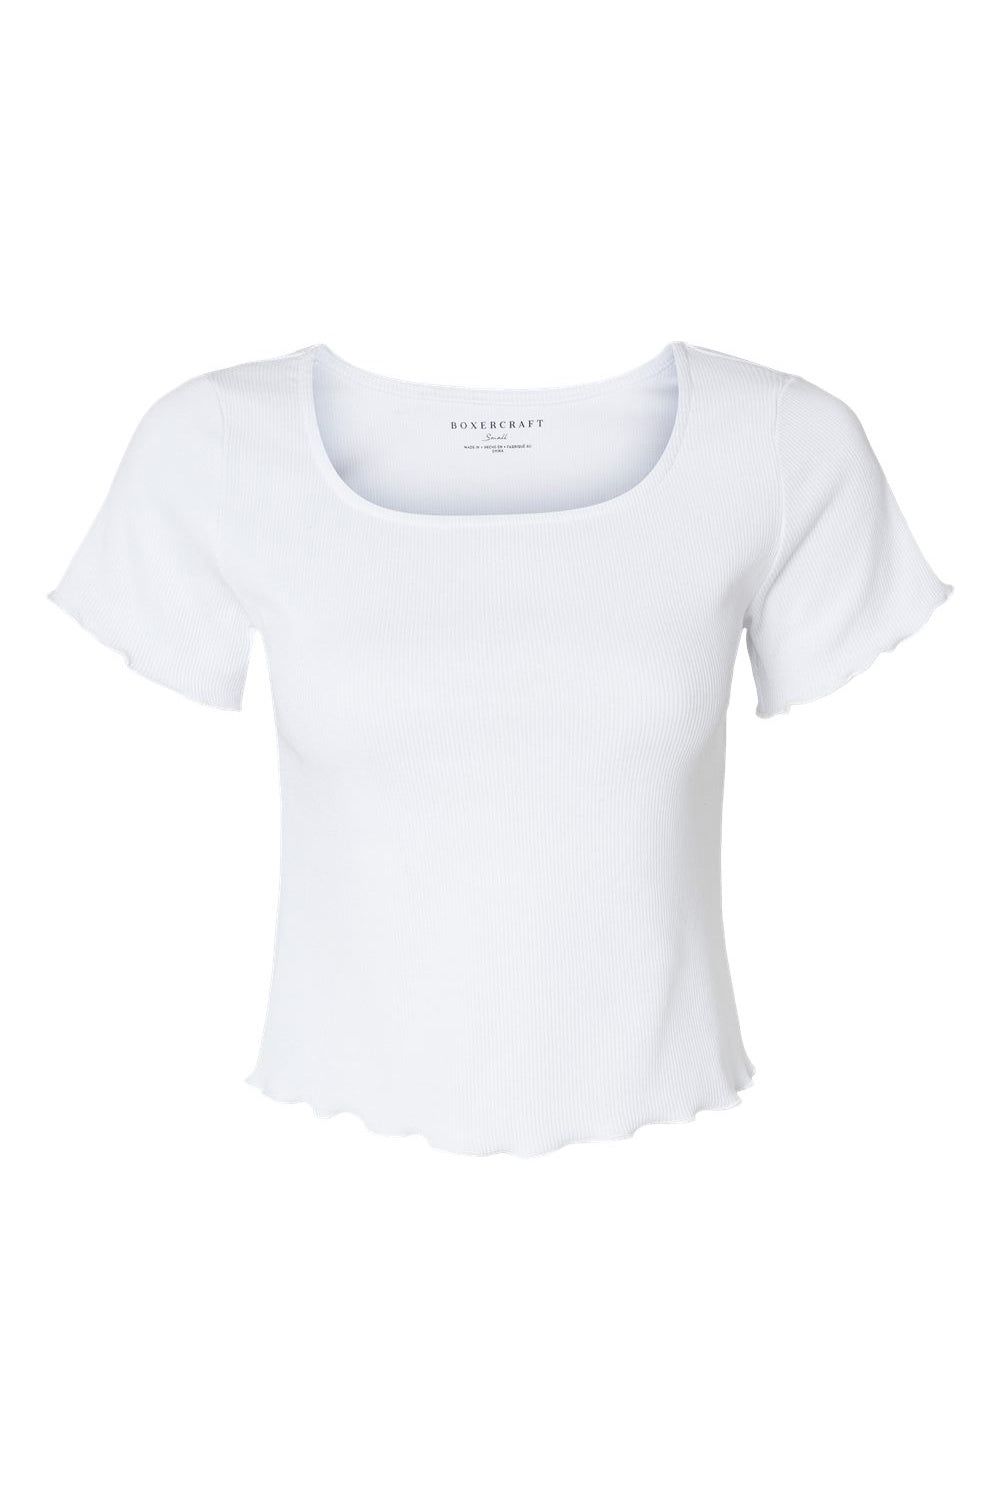 Boxercraft BW2403 Womens Baby Rib Short Sleeve Scoop Neck T-Shirt White Flat Front